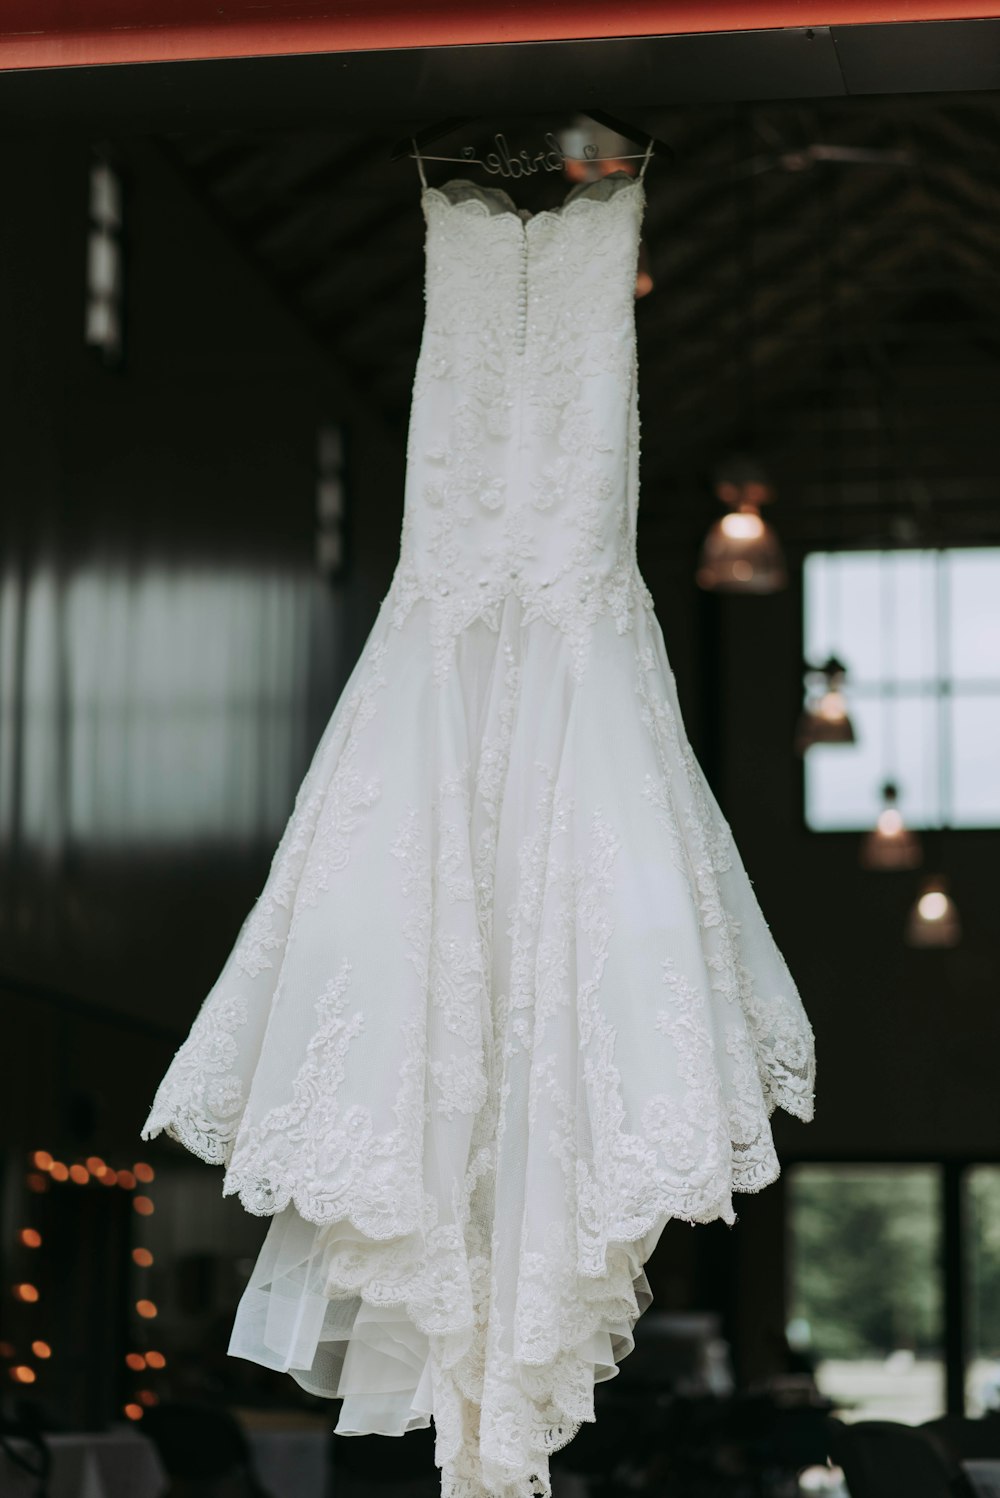 women's white strapless wedding dress hanged on clothes hanger